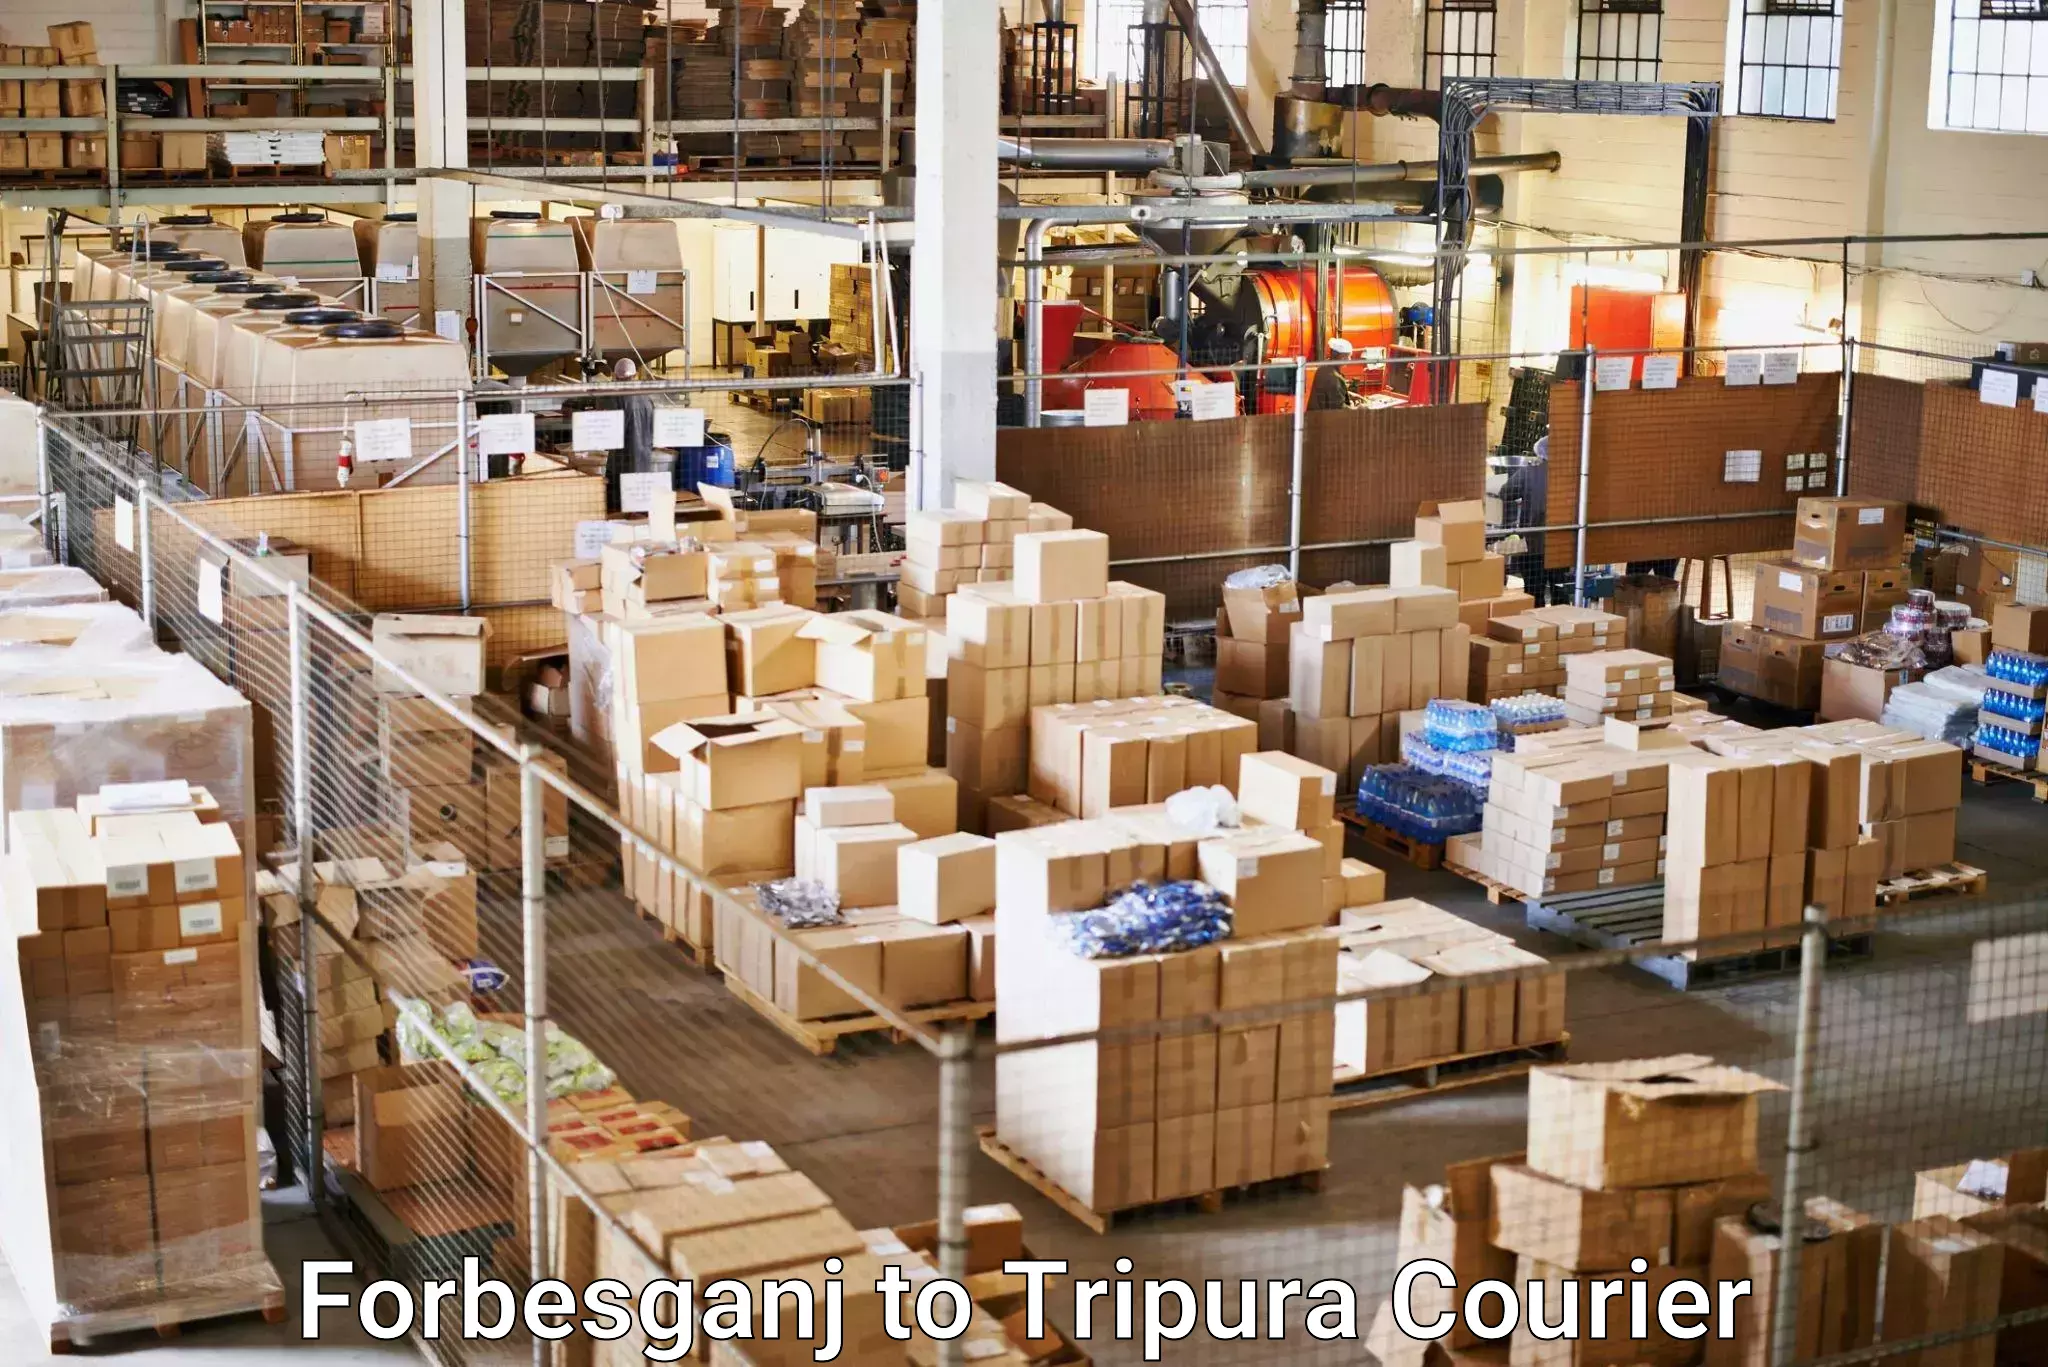 User-friendly delivery service Forbesganj to Tripura